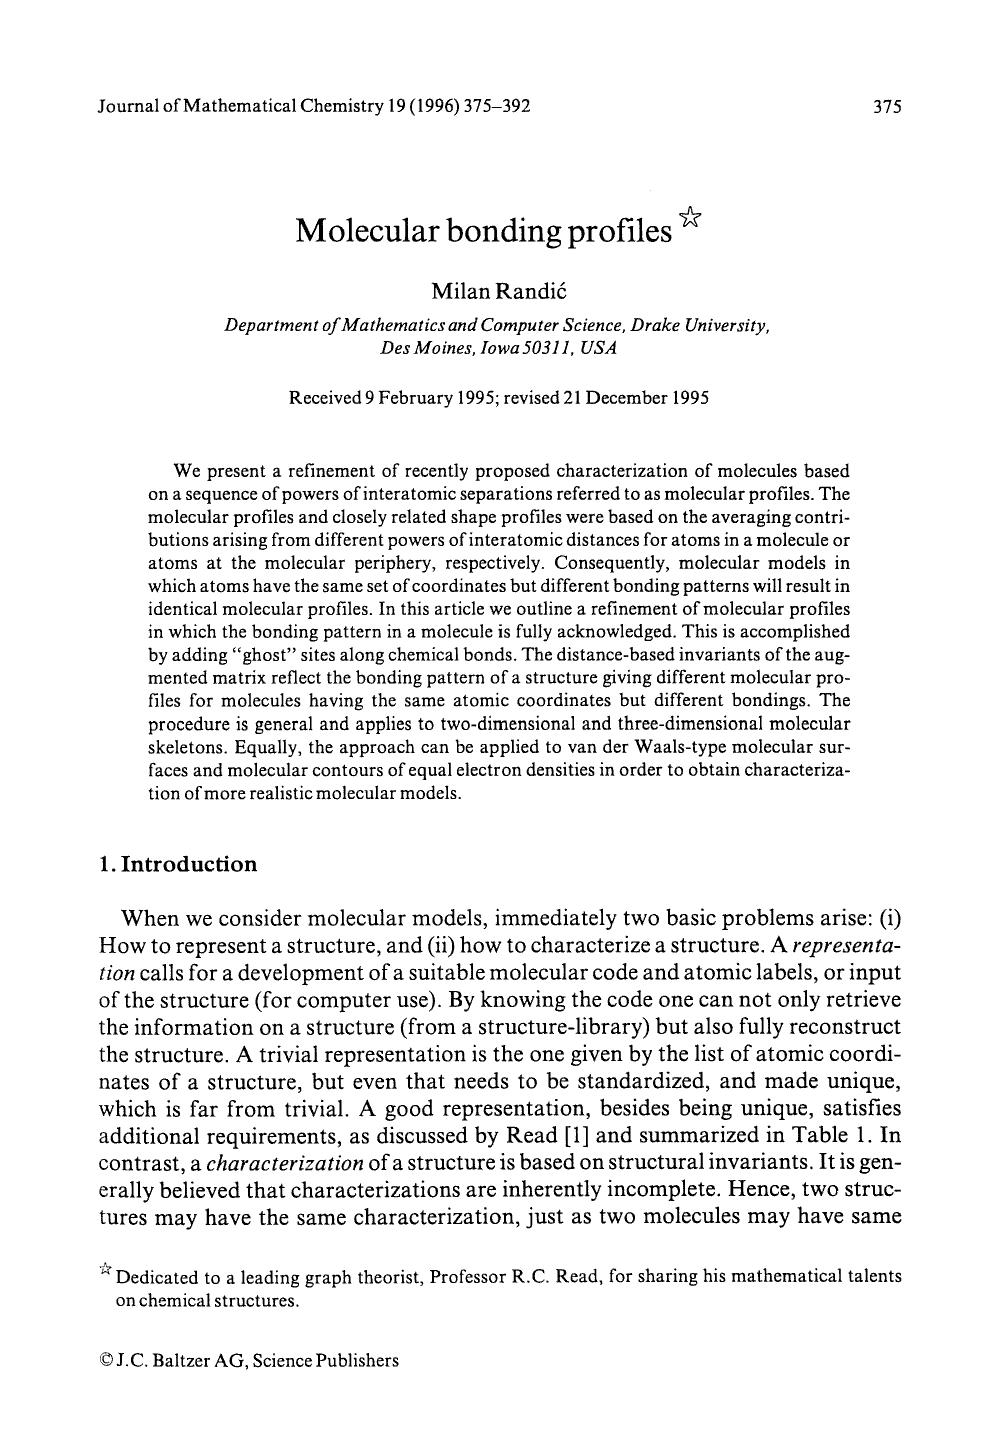 Molecular bonding profiles by Unknown